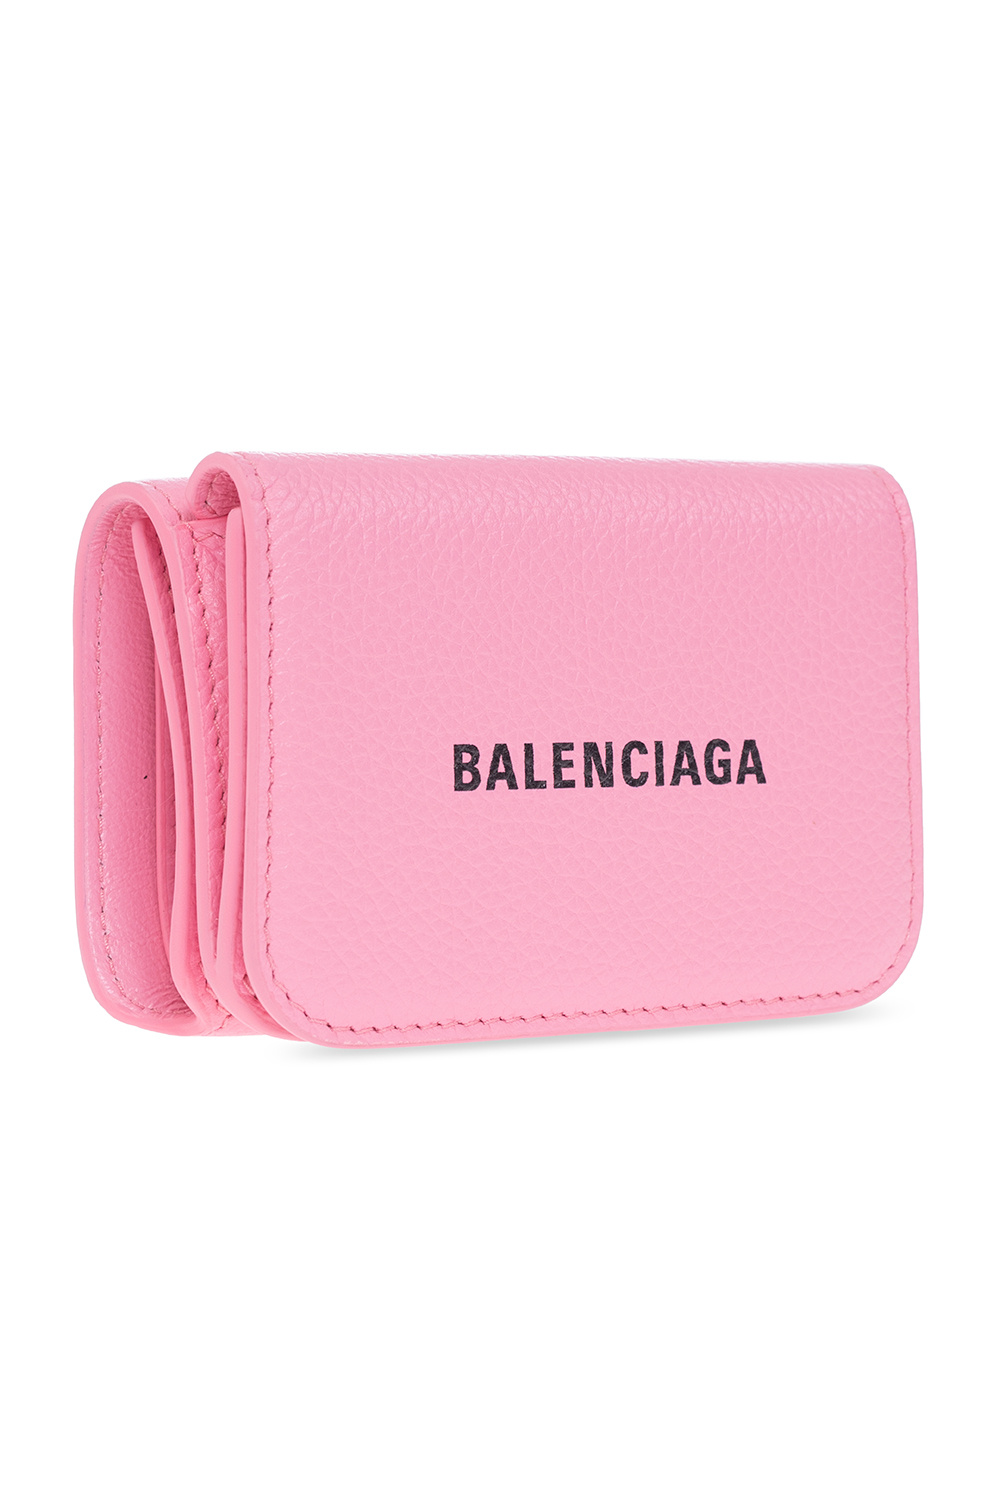 Balenciaga Wallet with logo | Women's Accessories | IetpShops